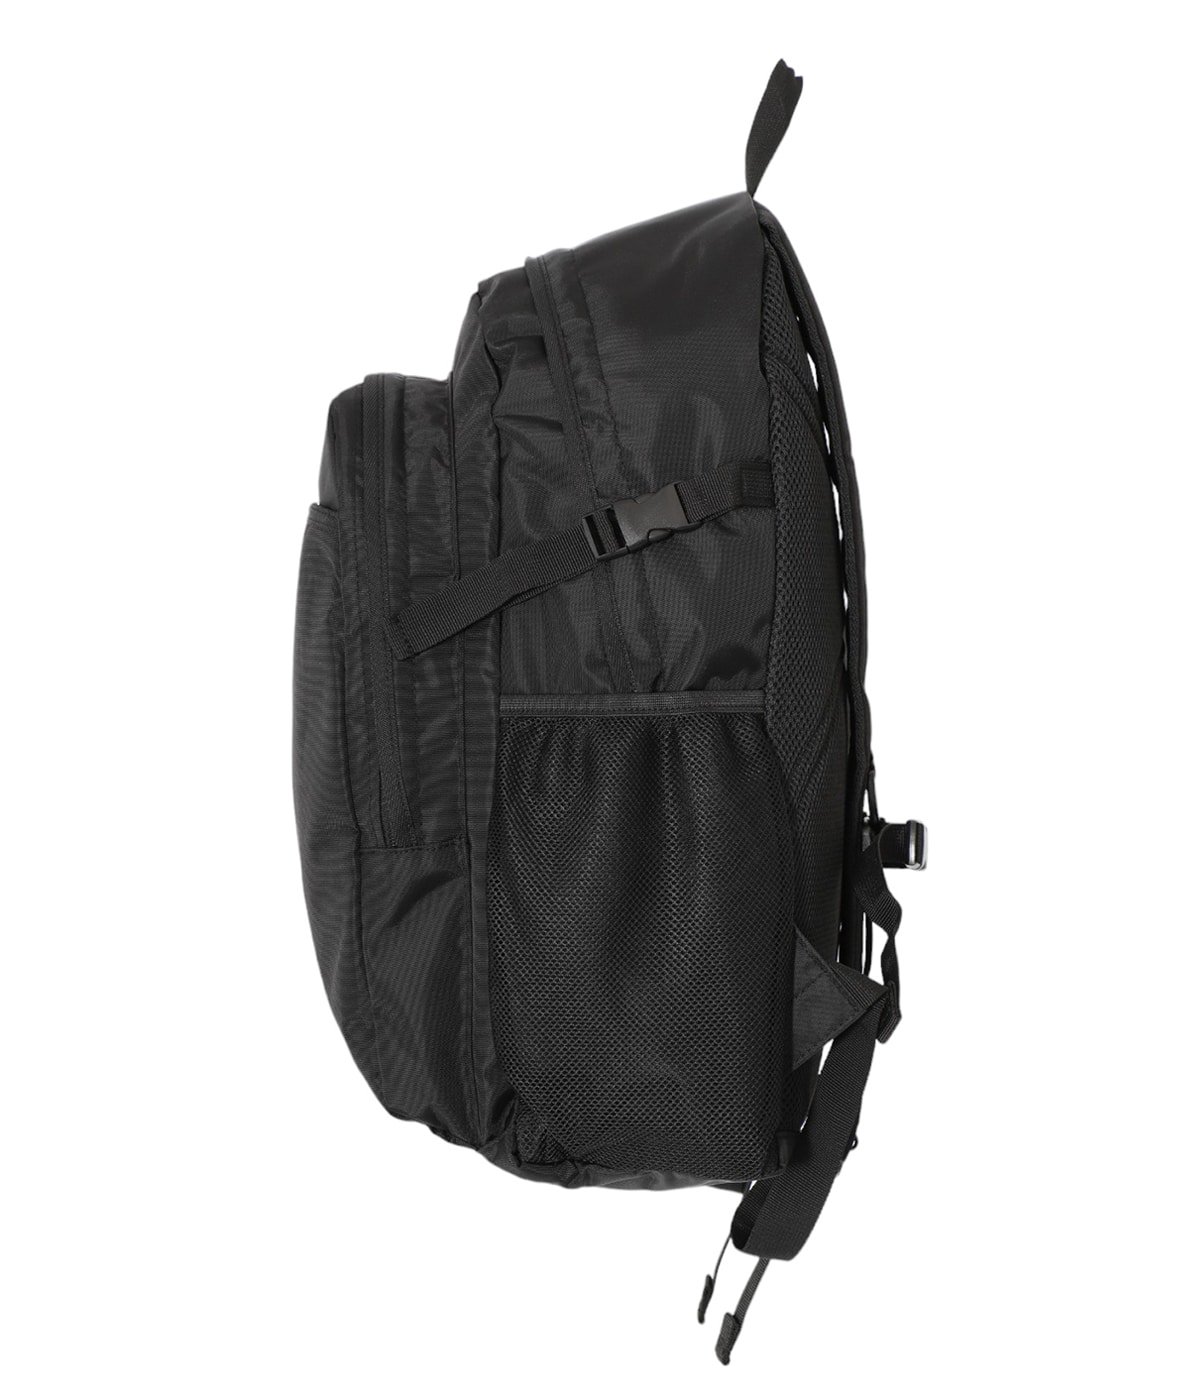 Sport Backpack | BOTT(ボット) / バッグ バックパック (メンズ)の通販 